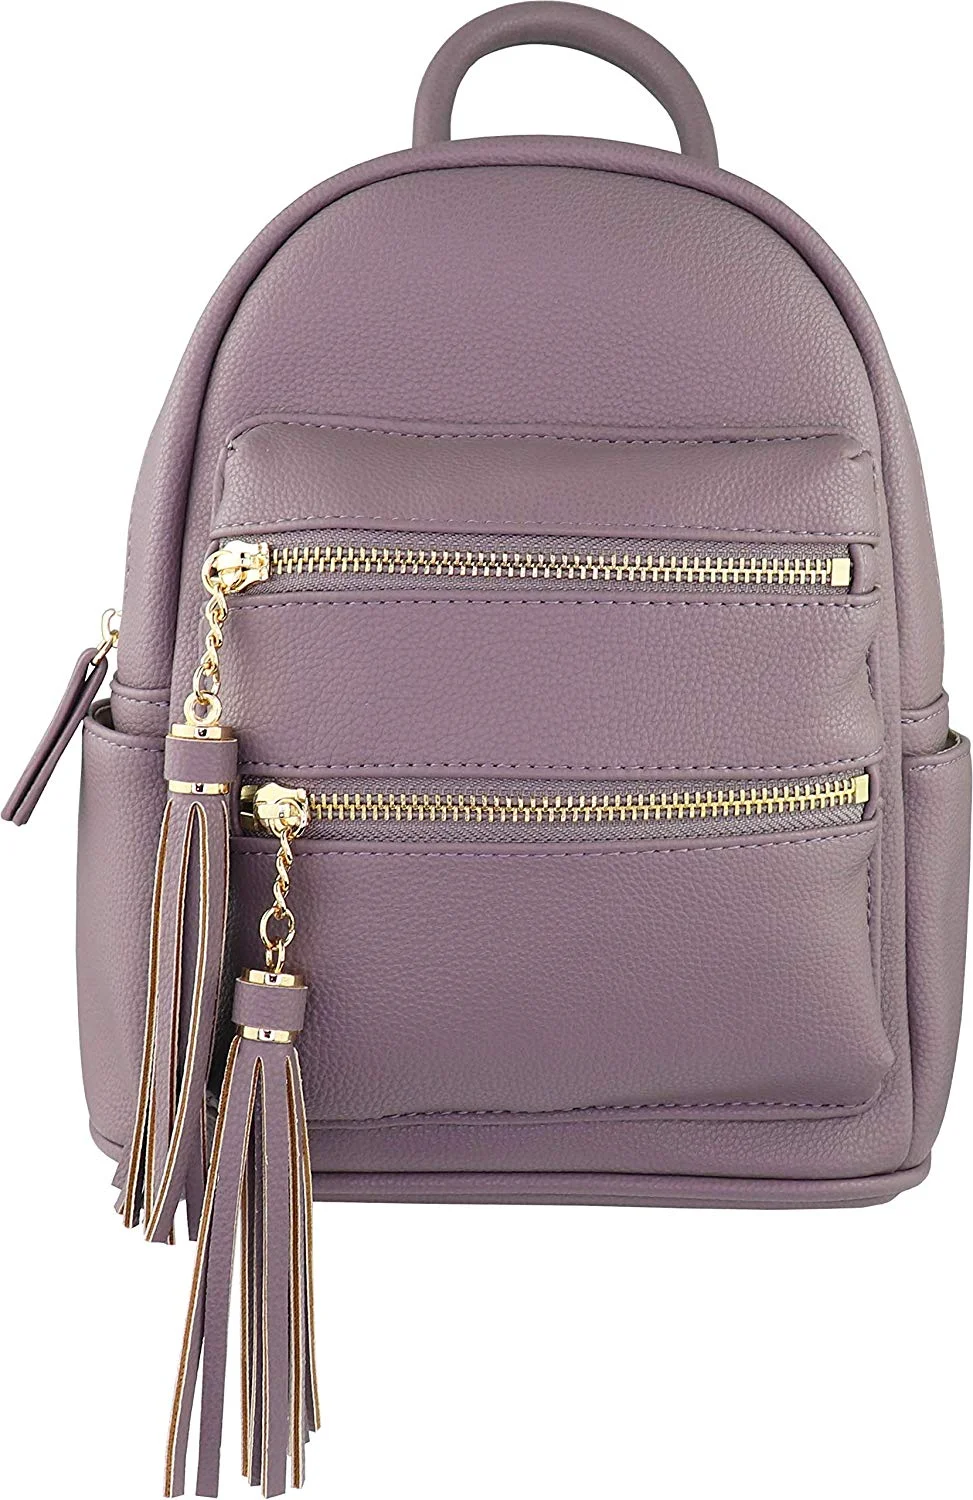 Women's Vegan Multi-Zipper Top Handle Mini Backpack with Tassel Accents